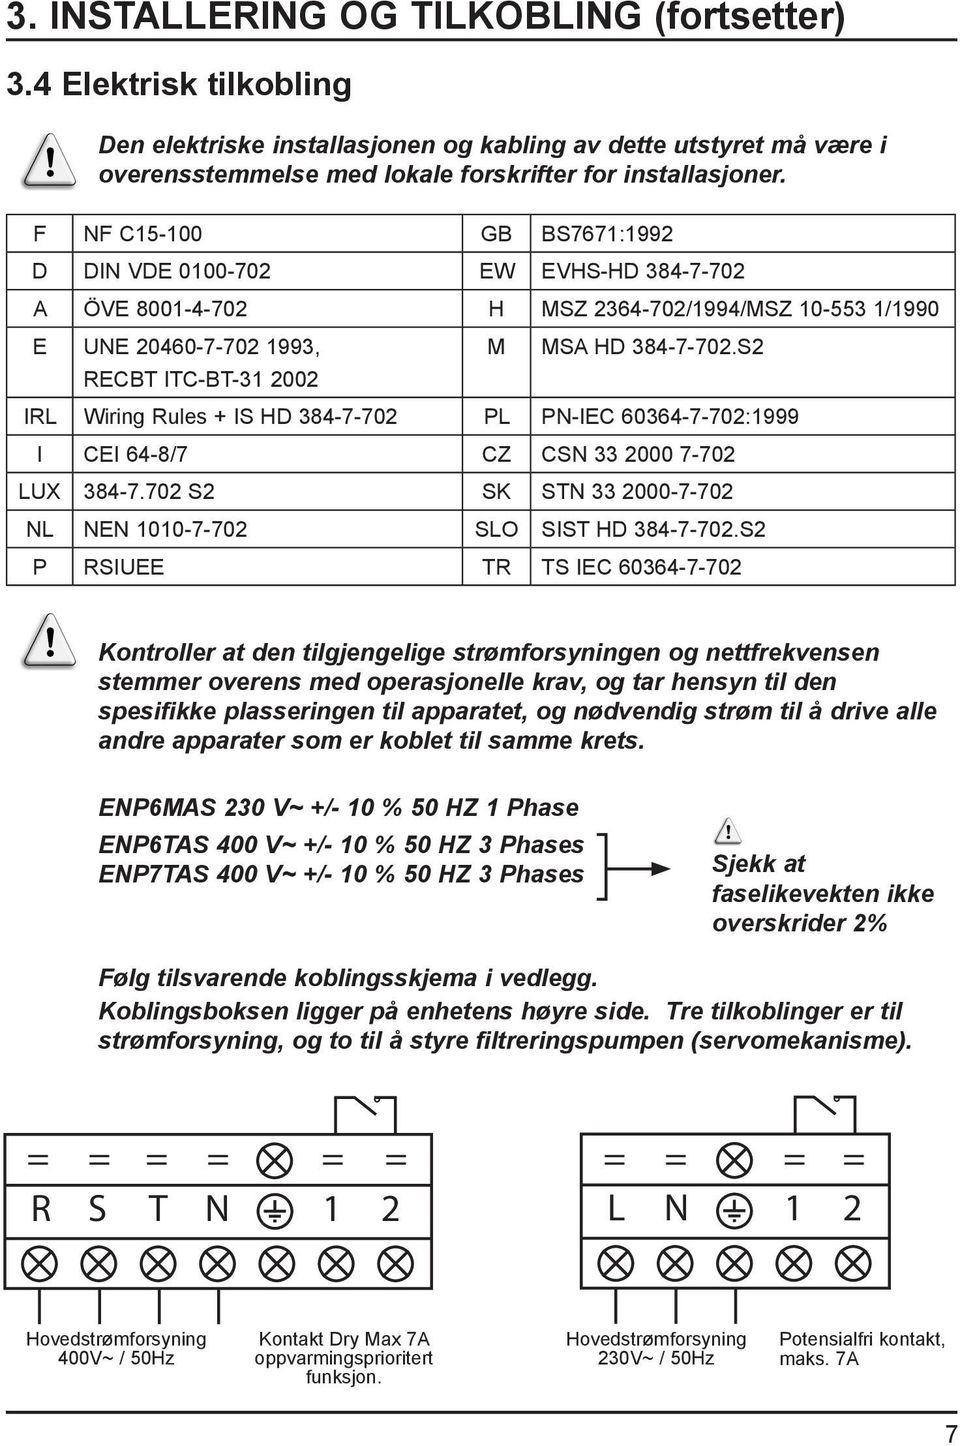 S2 RECBT ITC-BT-31 2002 IRL Wiring Rules + IS HD 384-7-702 PL PN-IEC 60364-7-702:1999 I CEI 64-8/7 CZ CSN 33 2000 7-702 LUX 384-7.702 S2 SK STN 33 2000-7-702 NL NEN 1010-7-702 SLO SIST HD 384-7-702.